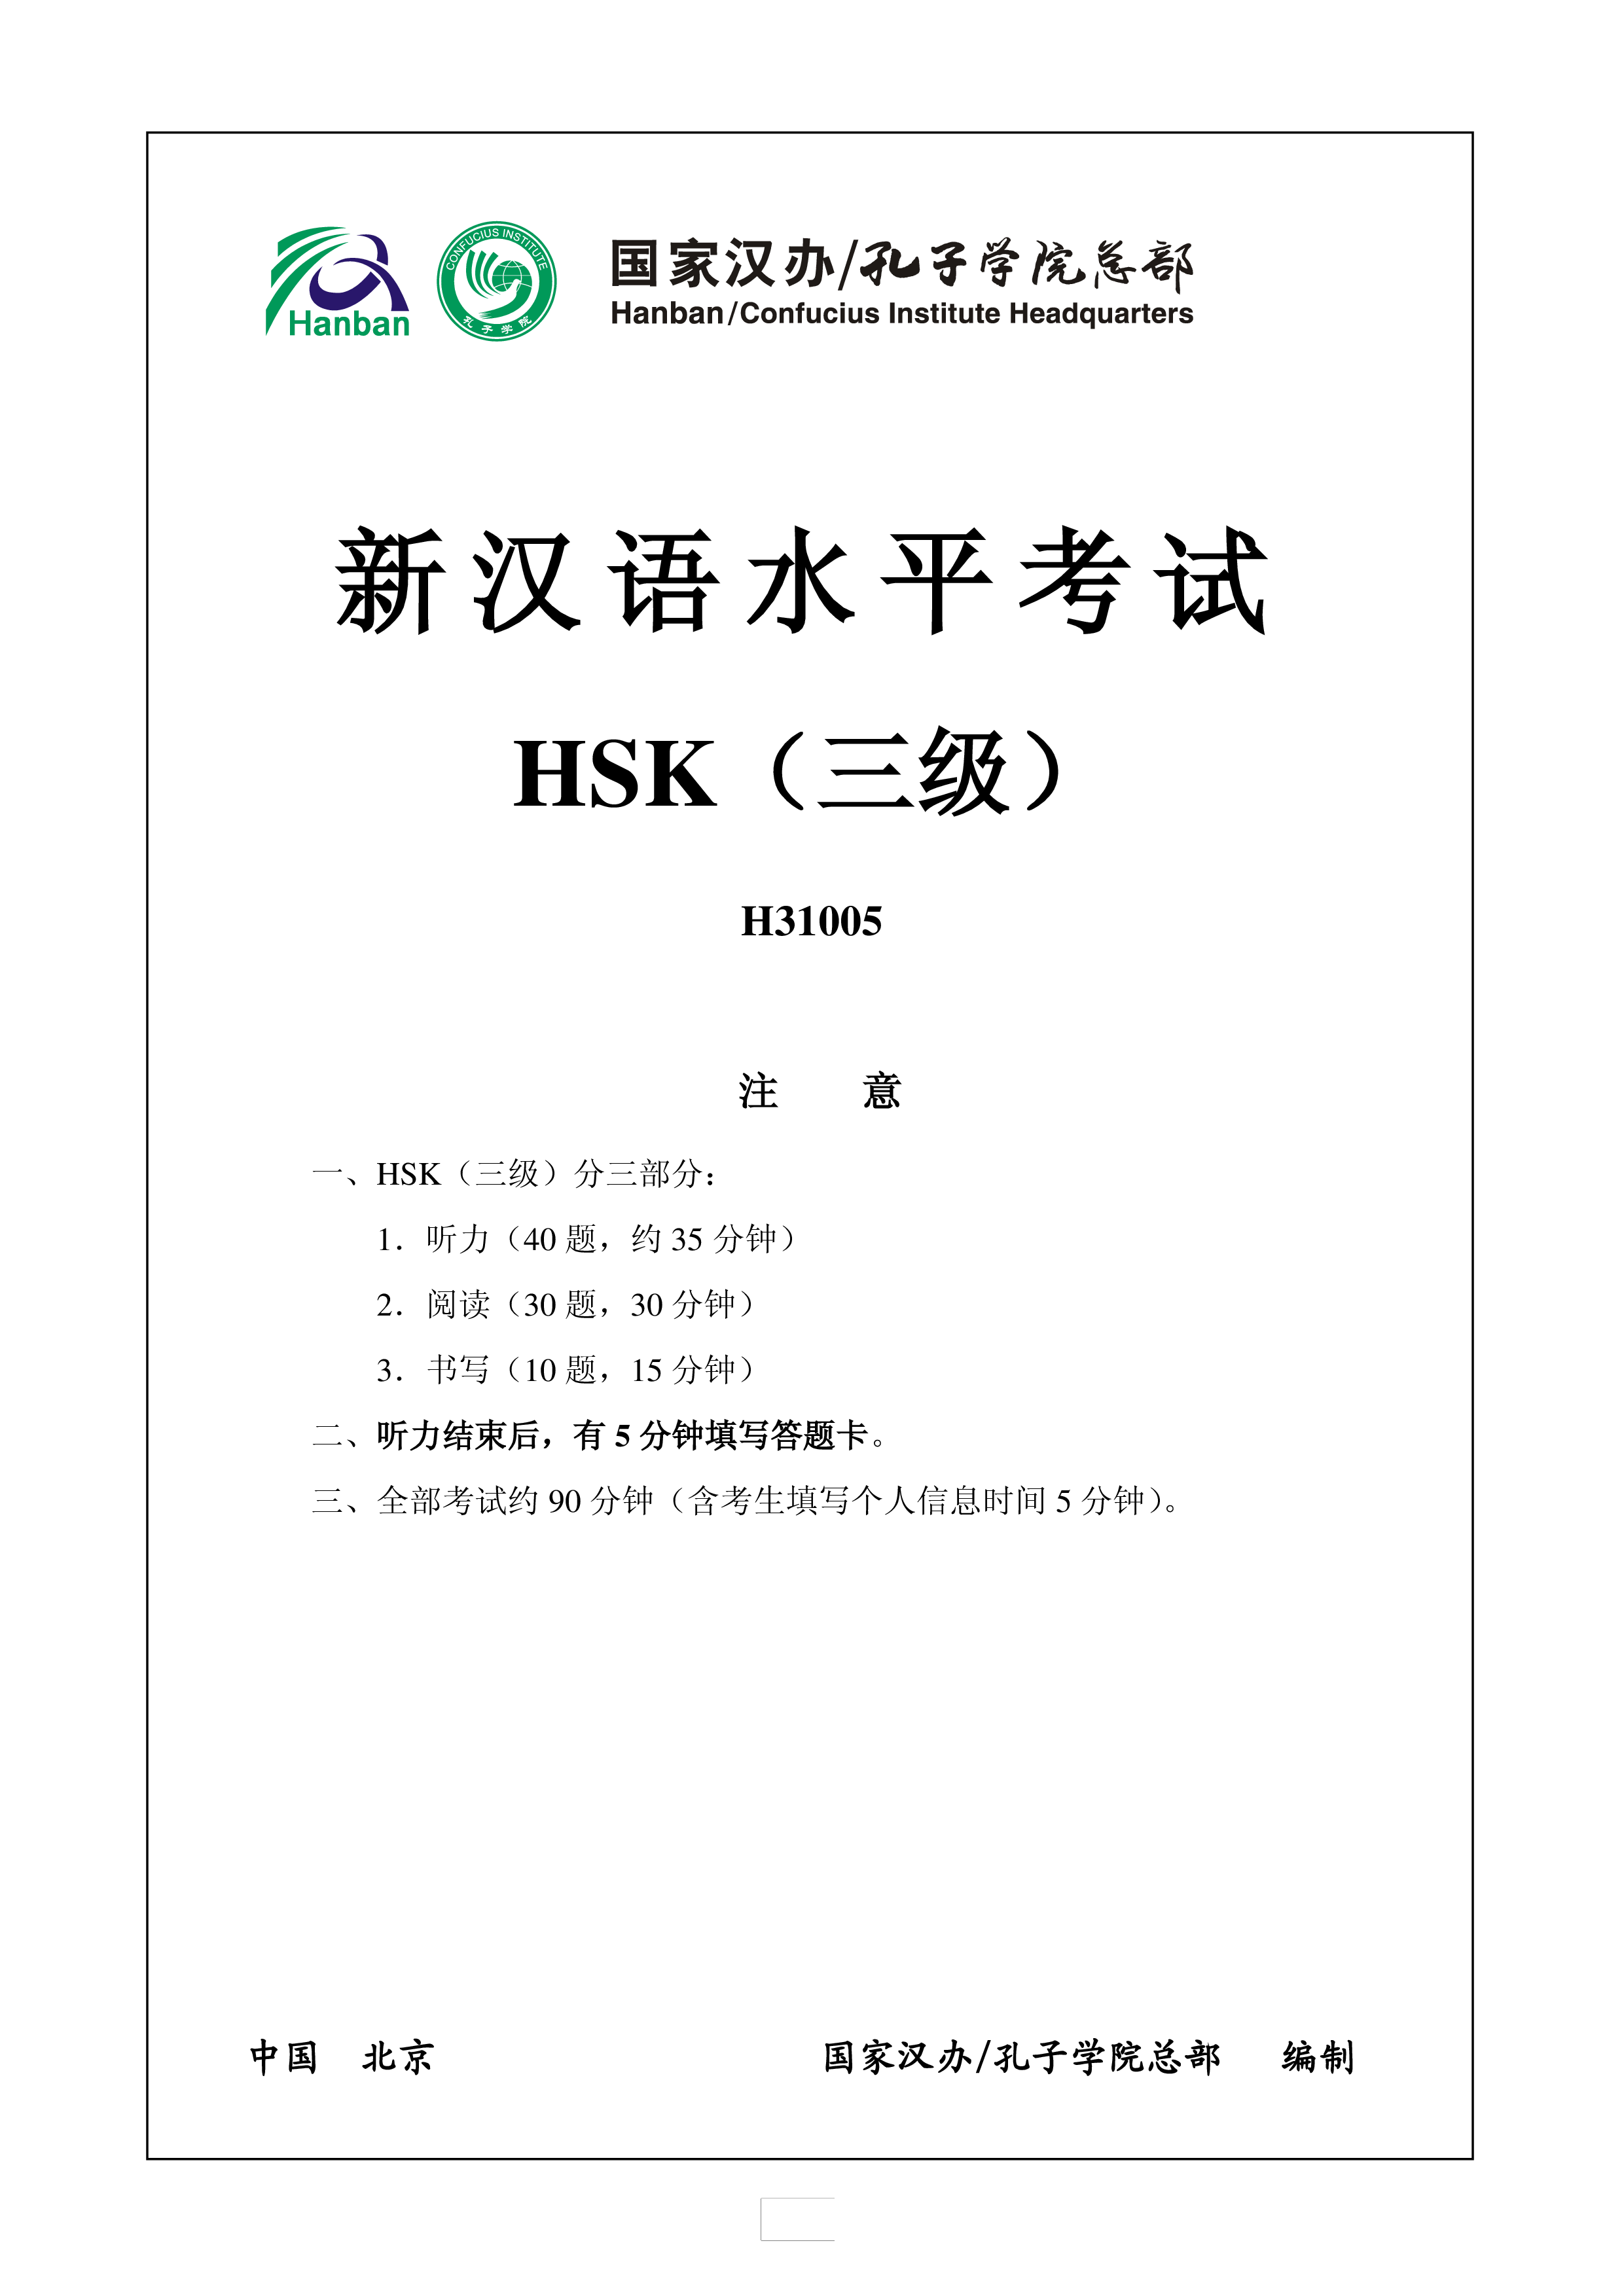 hsk3 chinese exam including answers # hsk3 h31005 Hauptschablonenbild